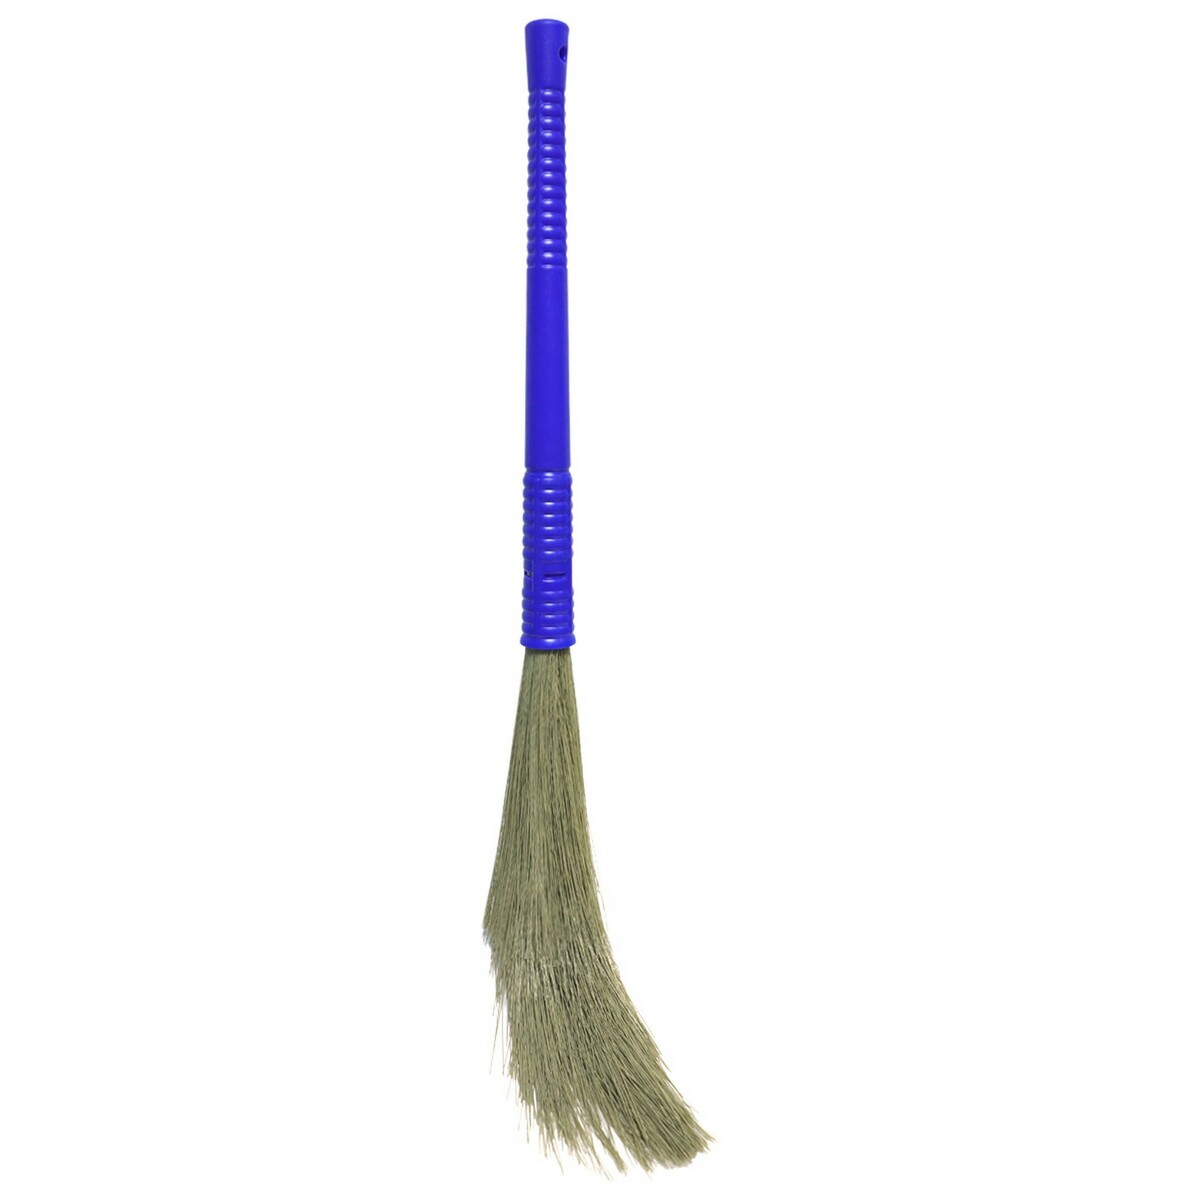 Rozenbal Dust Free Broom